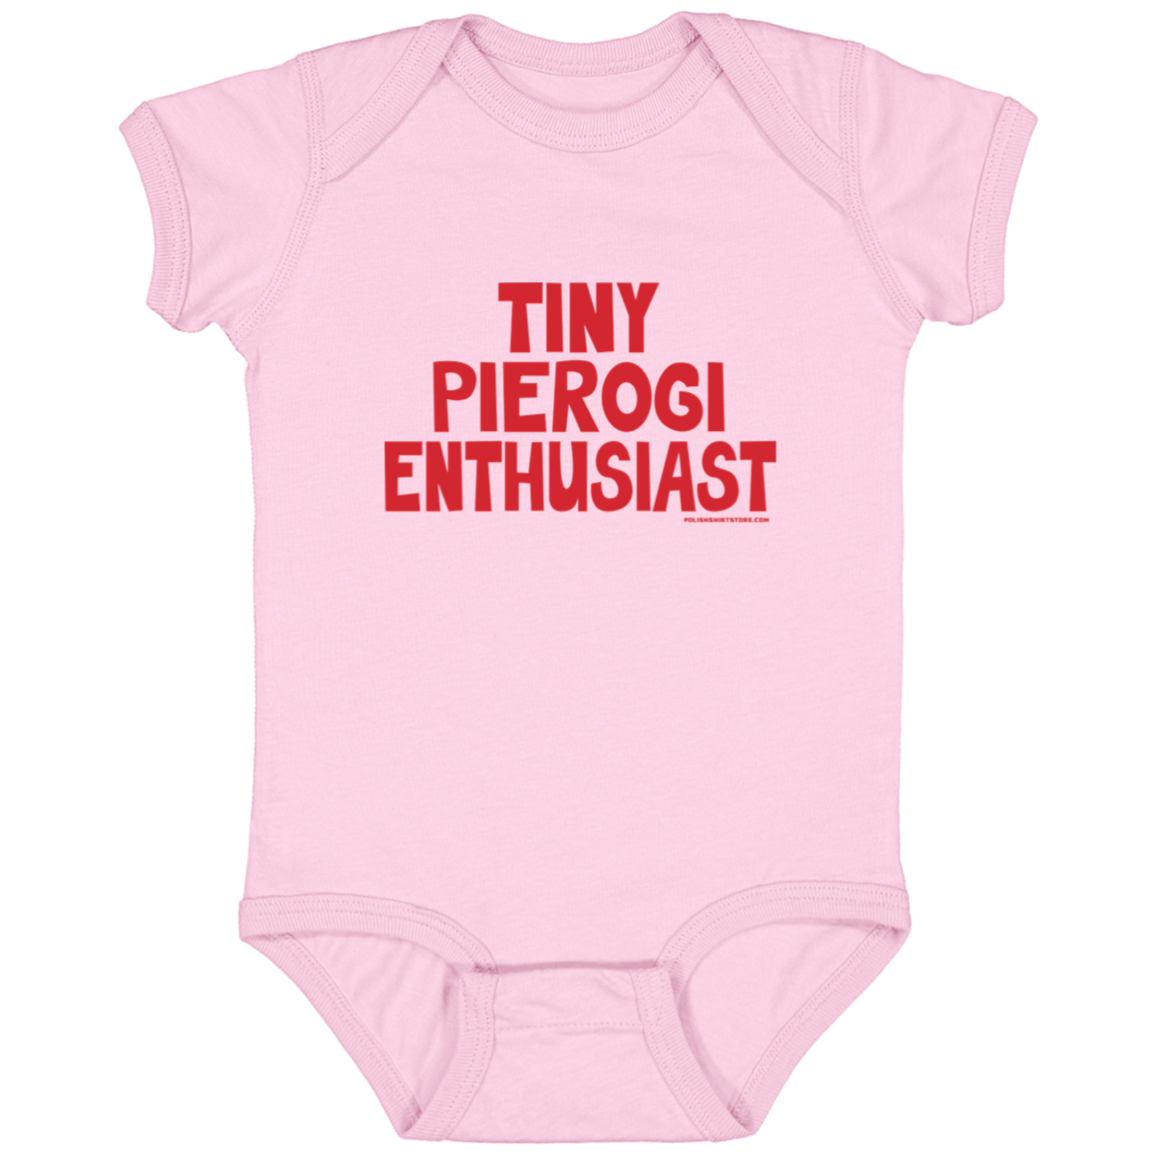 Tiny Pierogi Enthusiast Infant Bodysuit Baby CustomCat Pink Newborn 